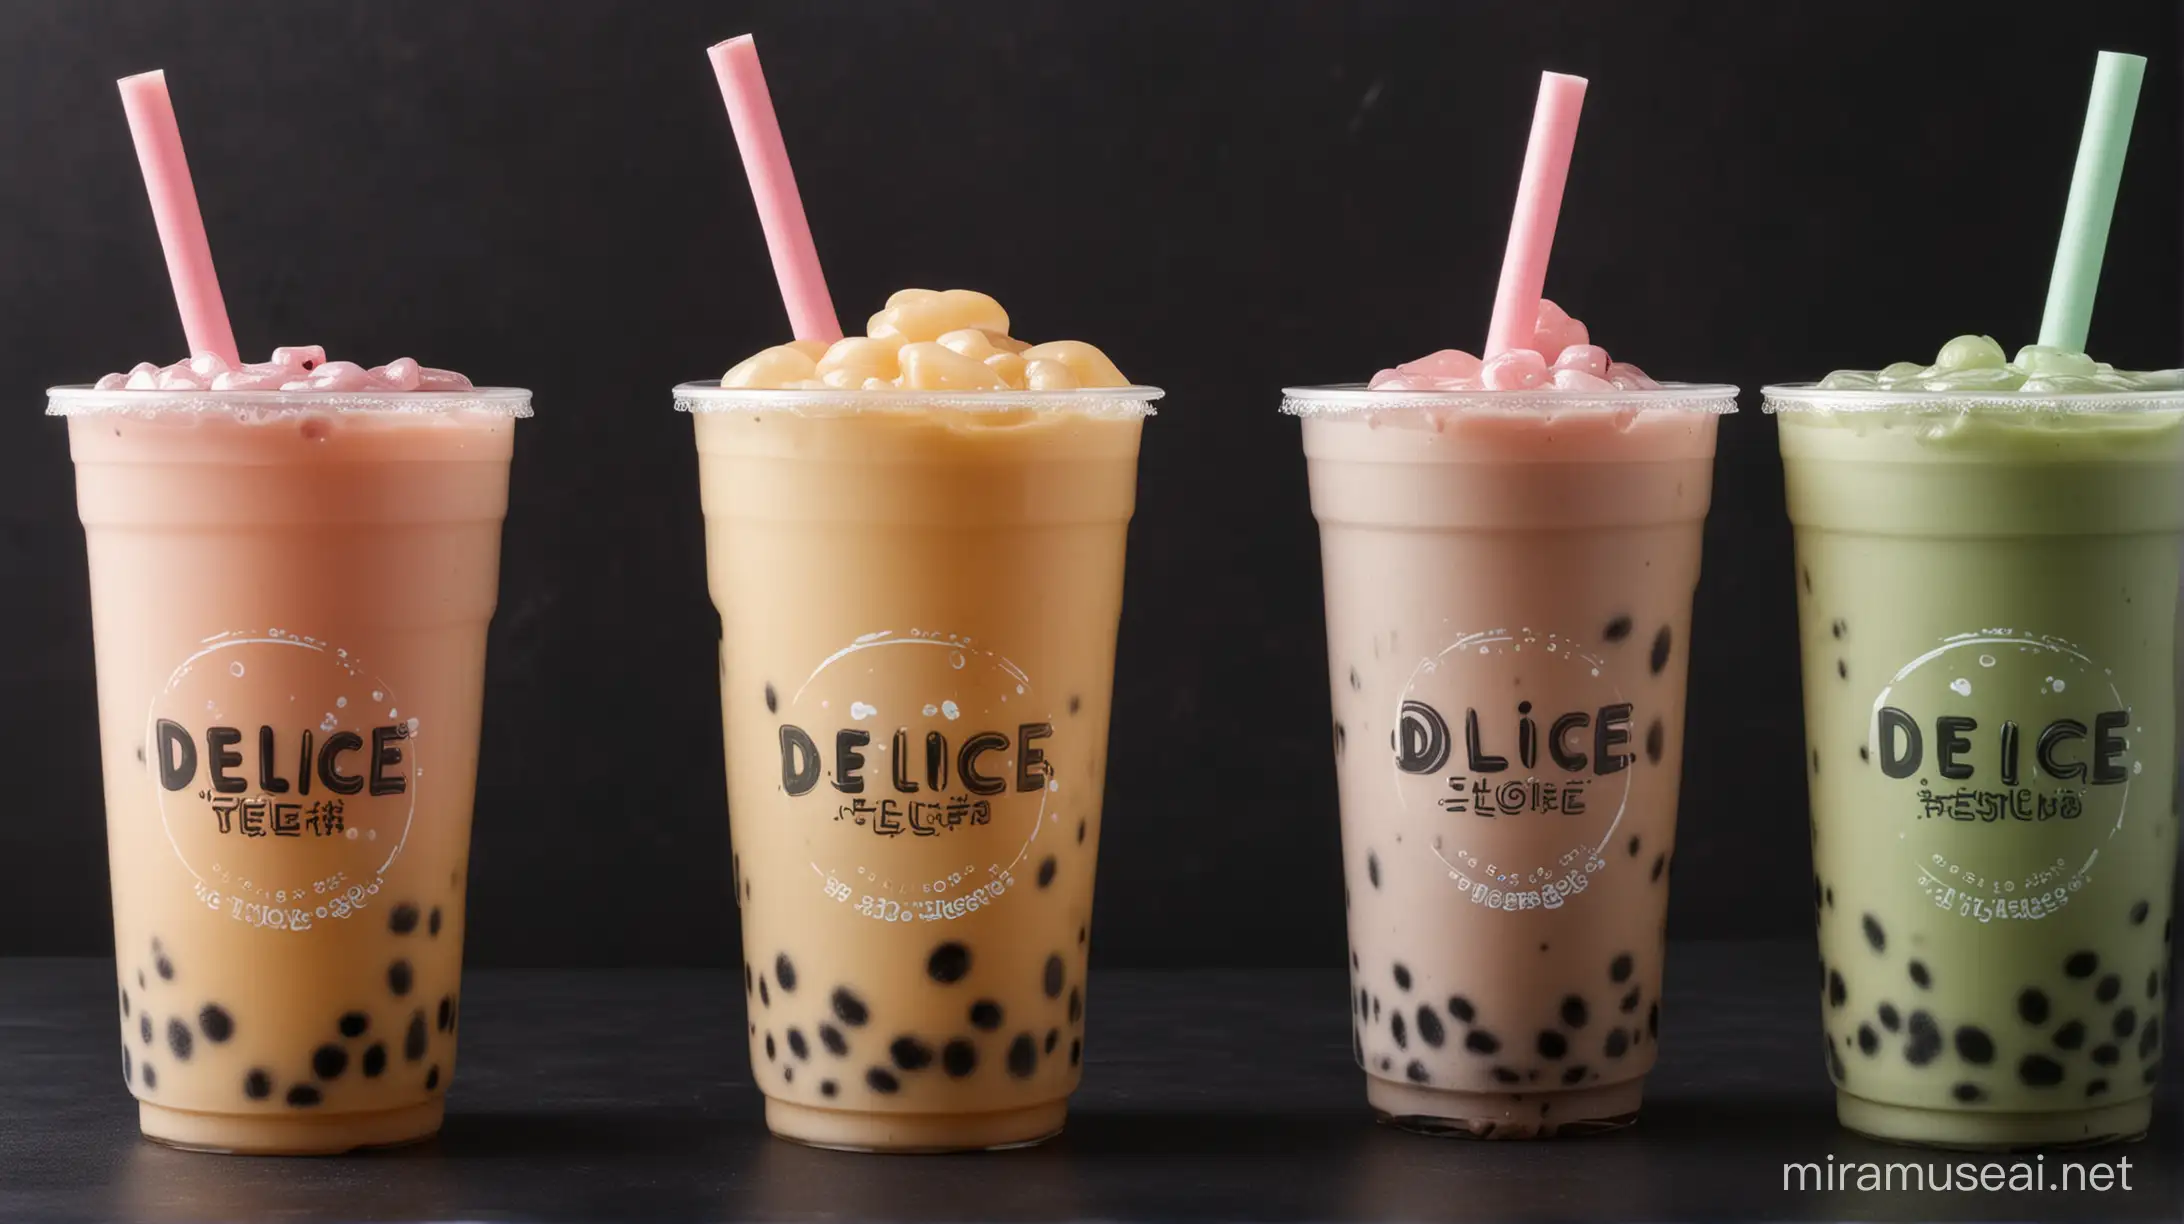 Colorful Bubble Tea Flavors with Delice Logo in Dark Mode